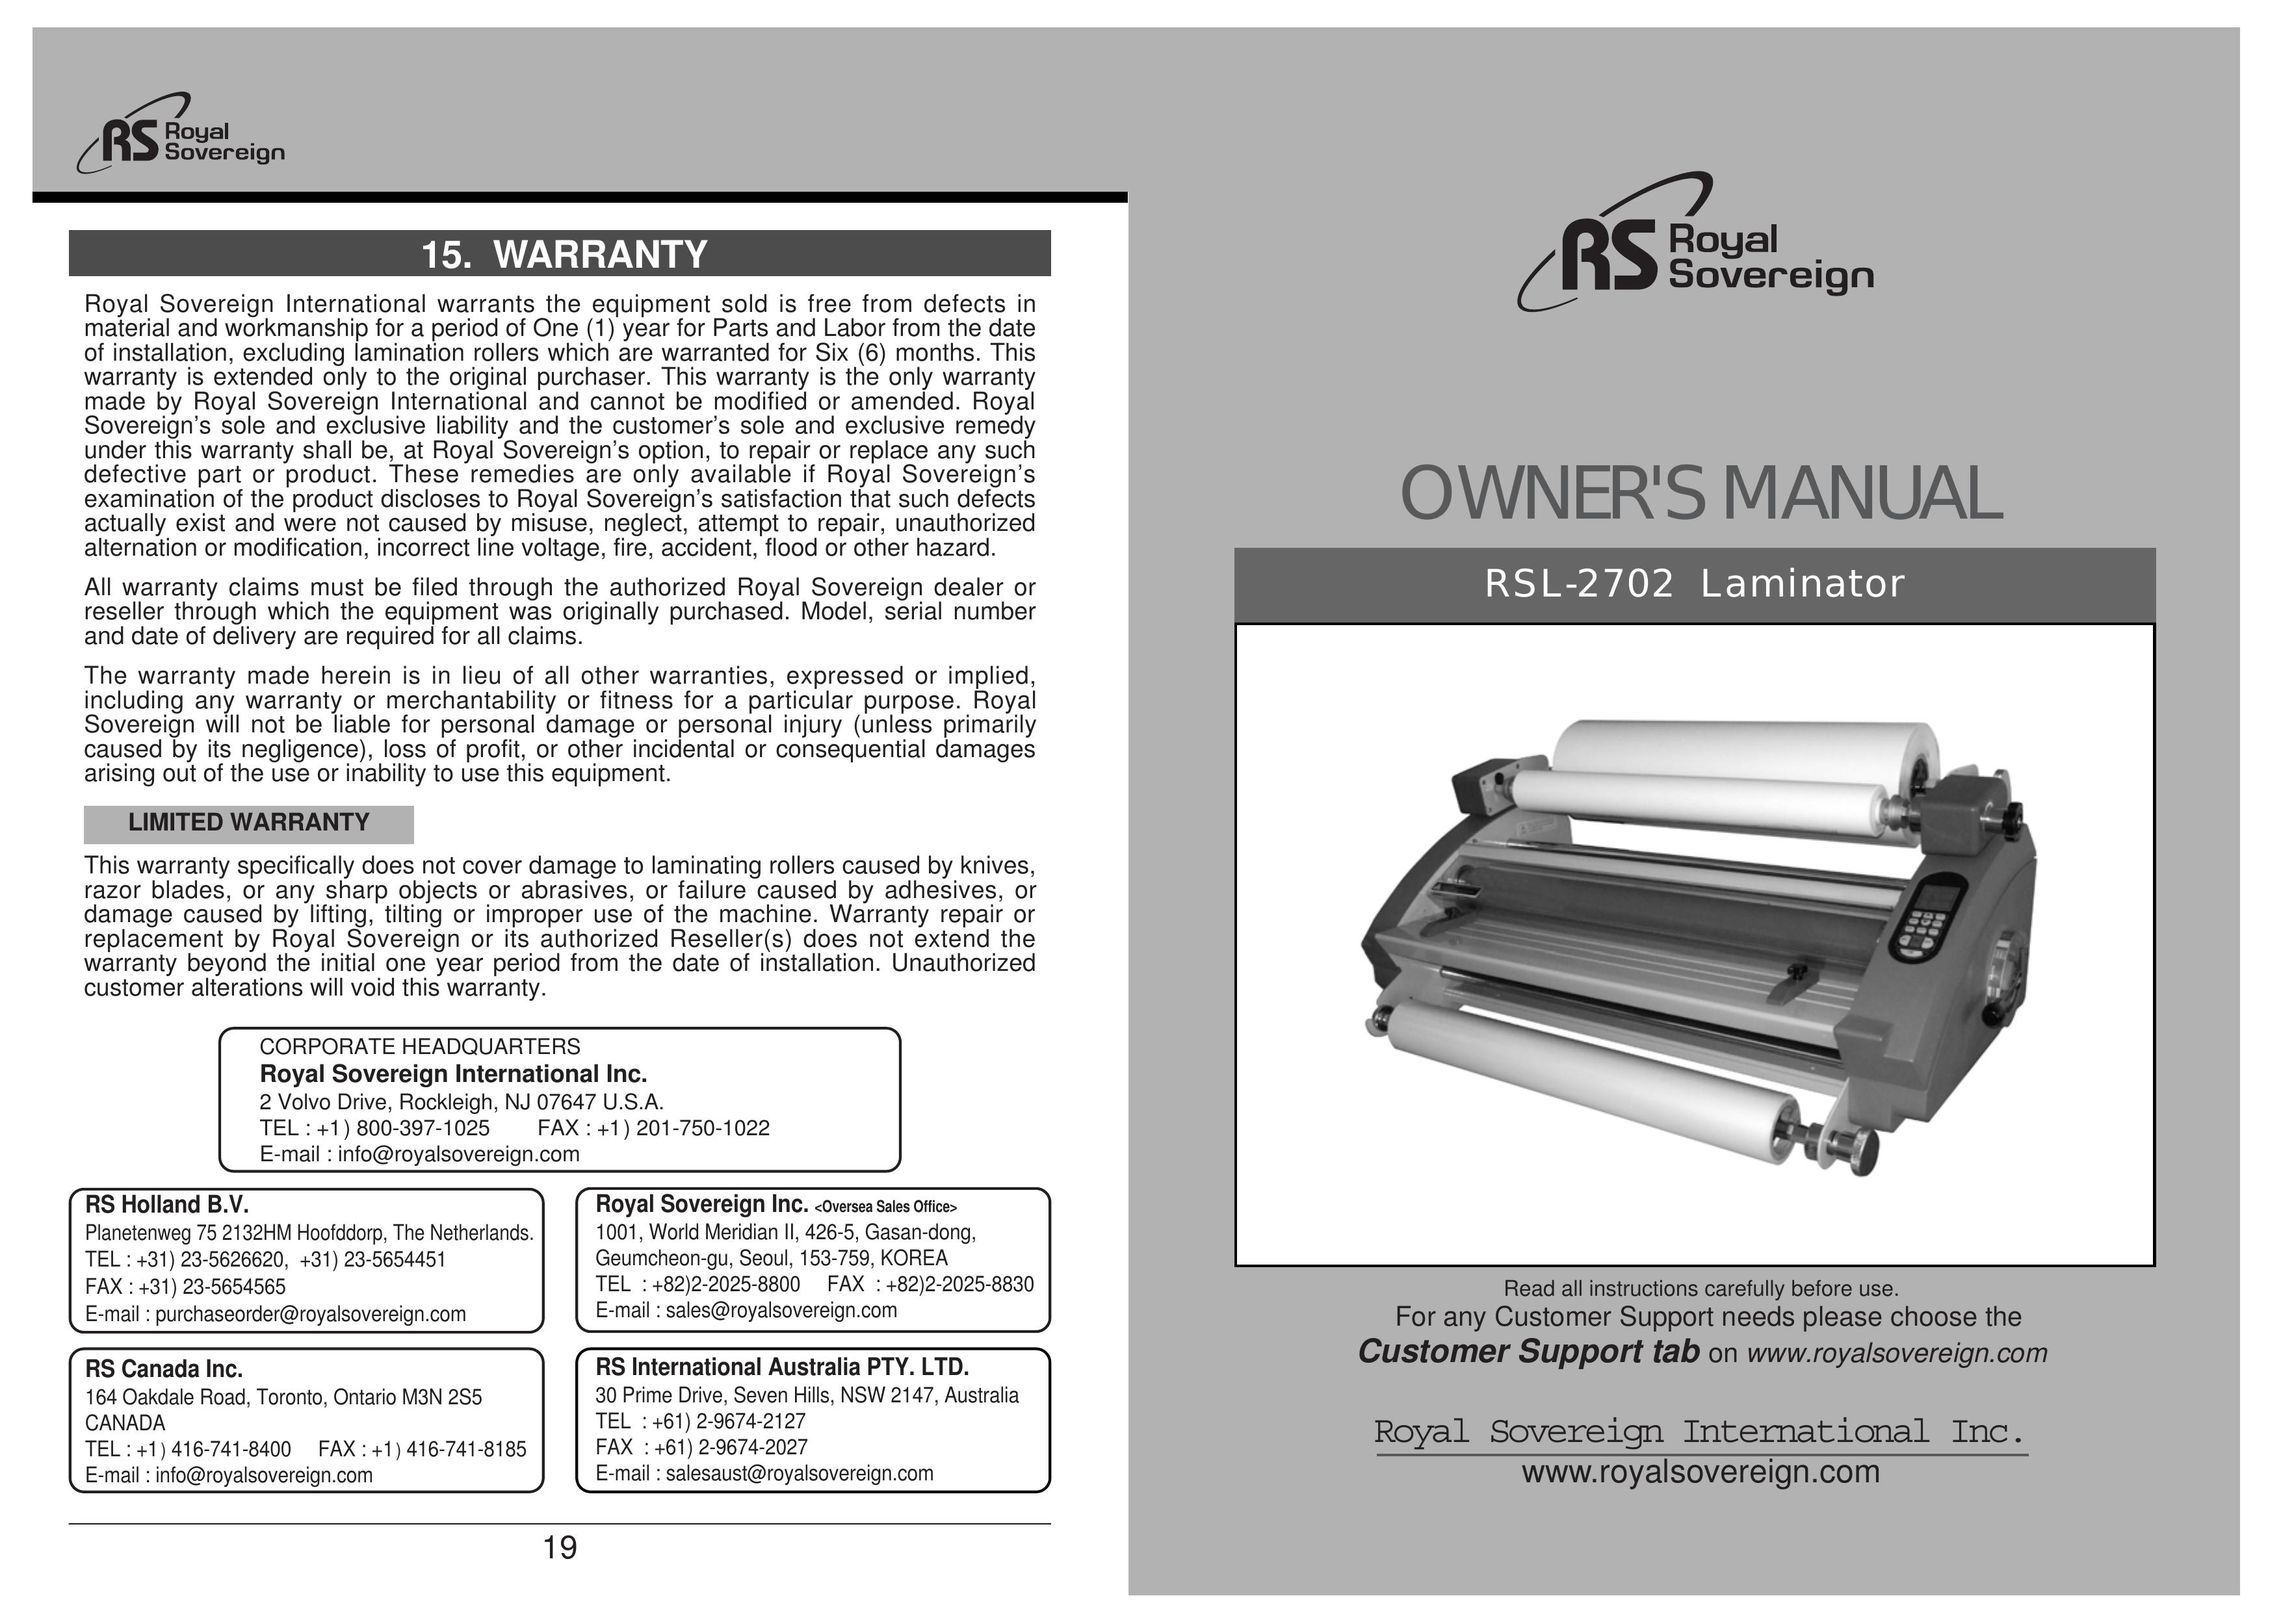 Royal Sovereign RSL-2702 Laminator User Manual